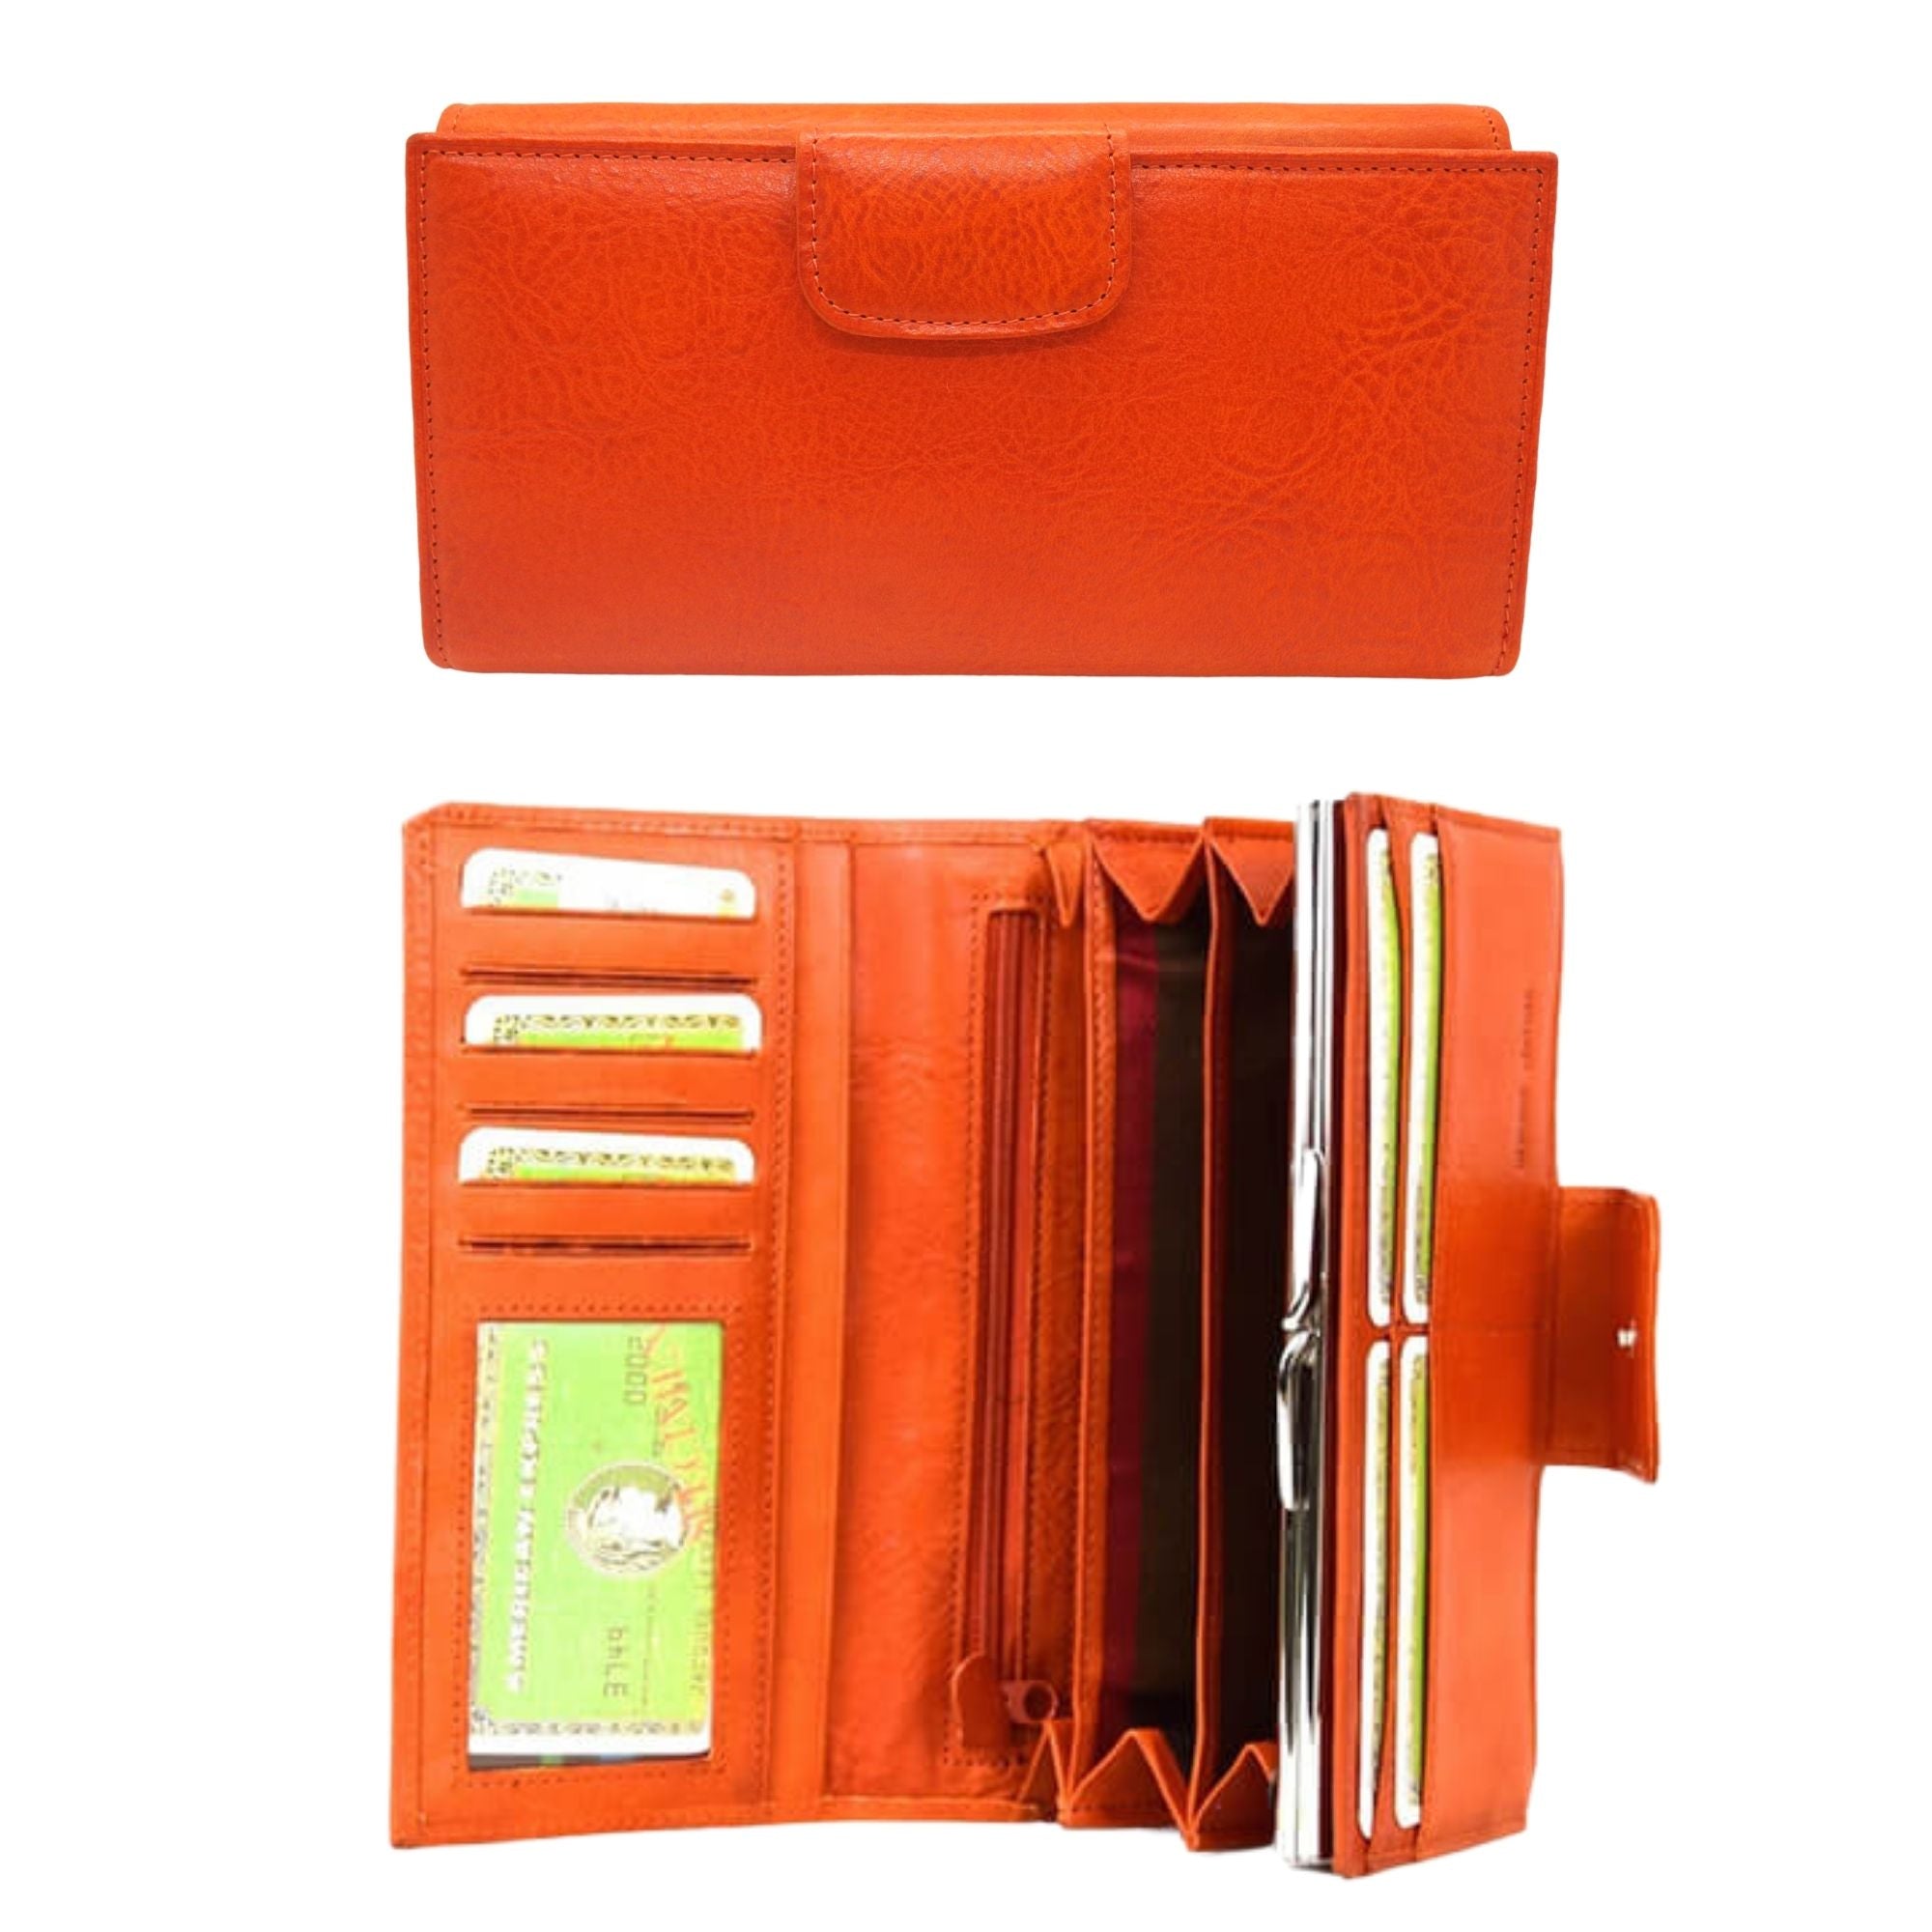 Ladies Soft Leather Purse Wallet Zip Around With Wrist Strap Large | eBay